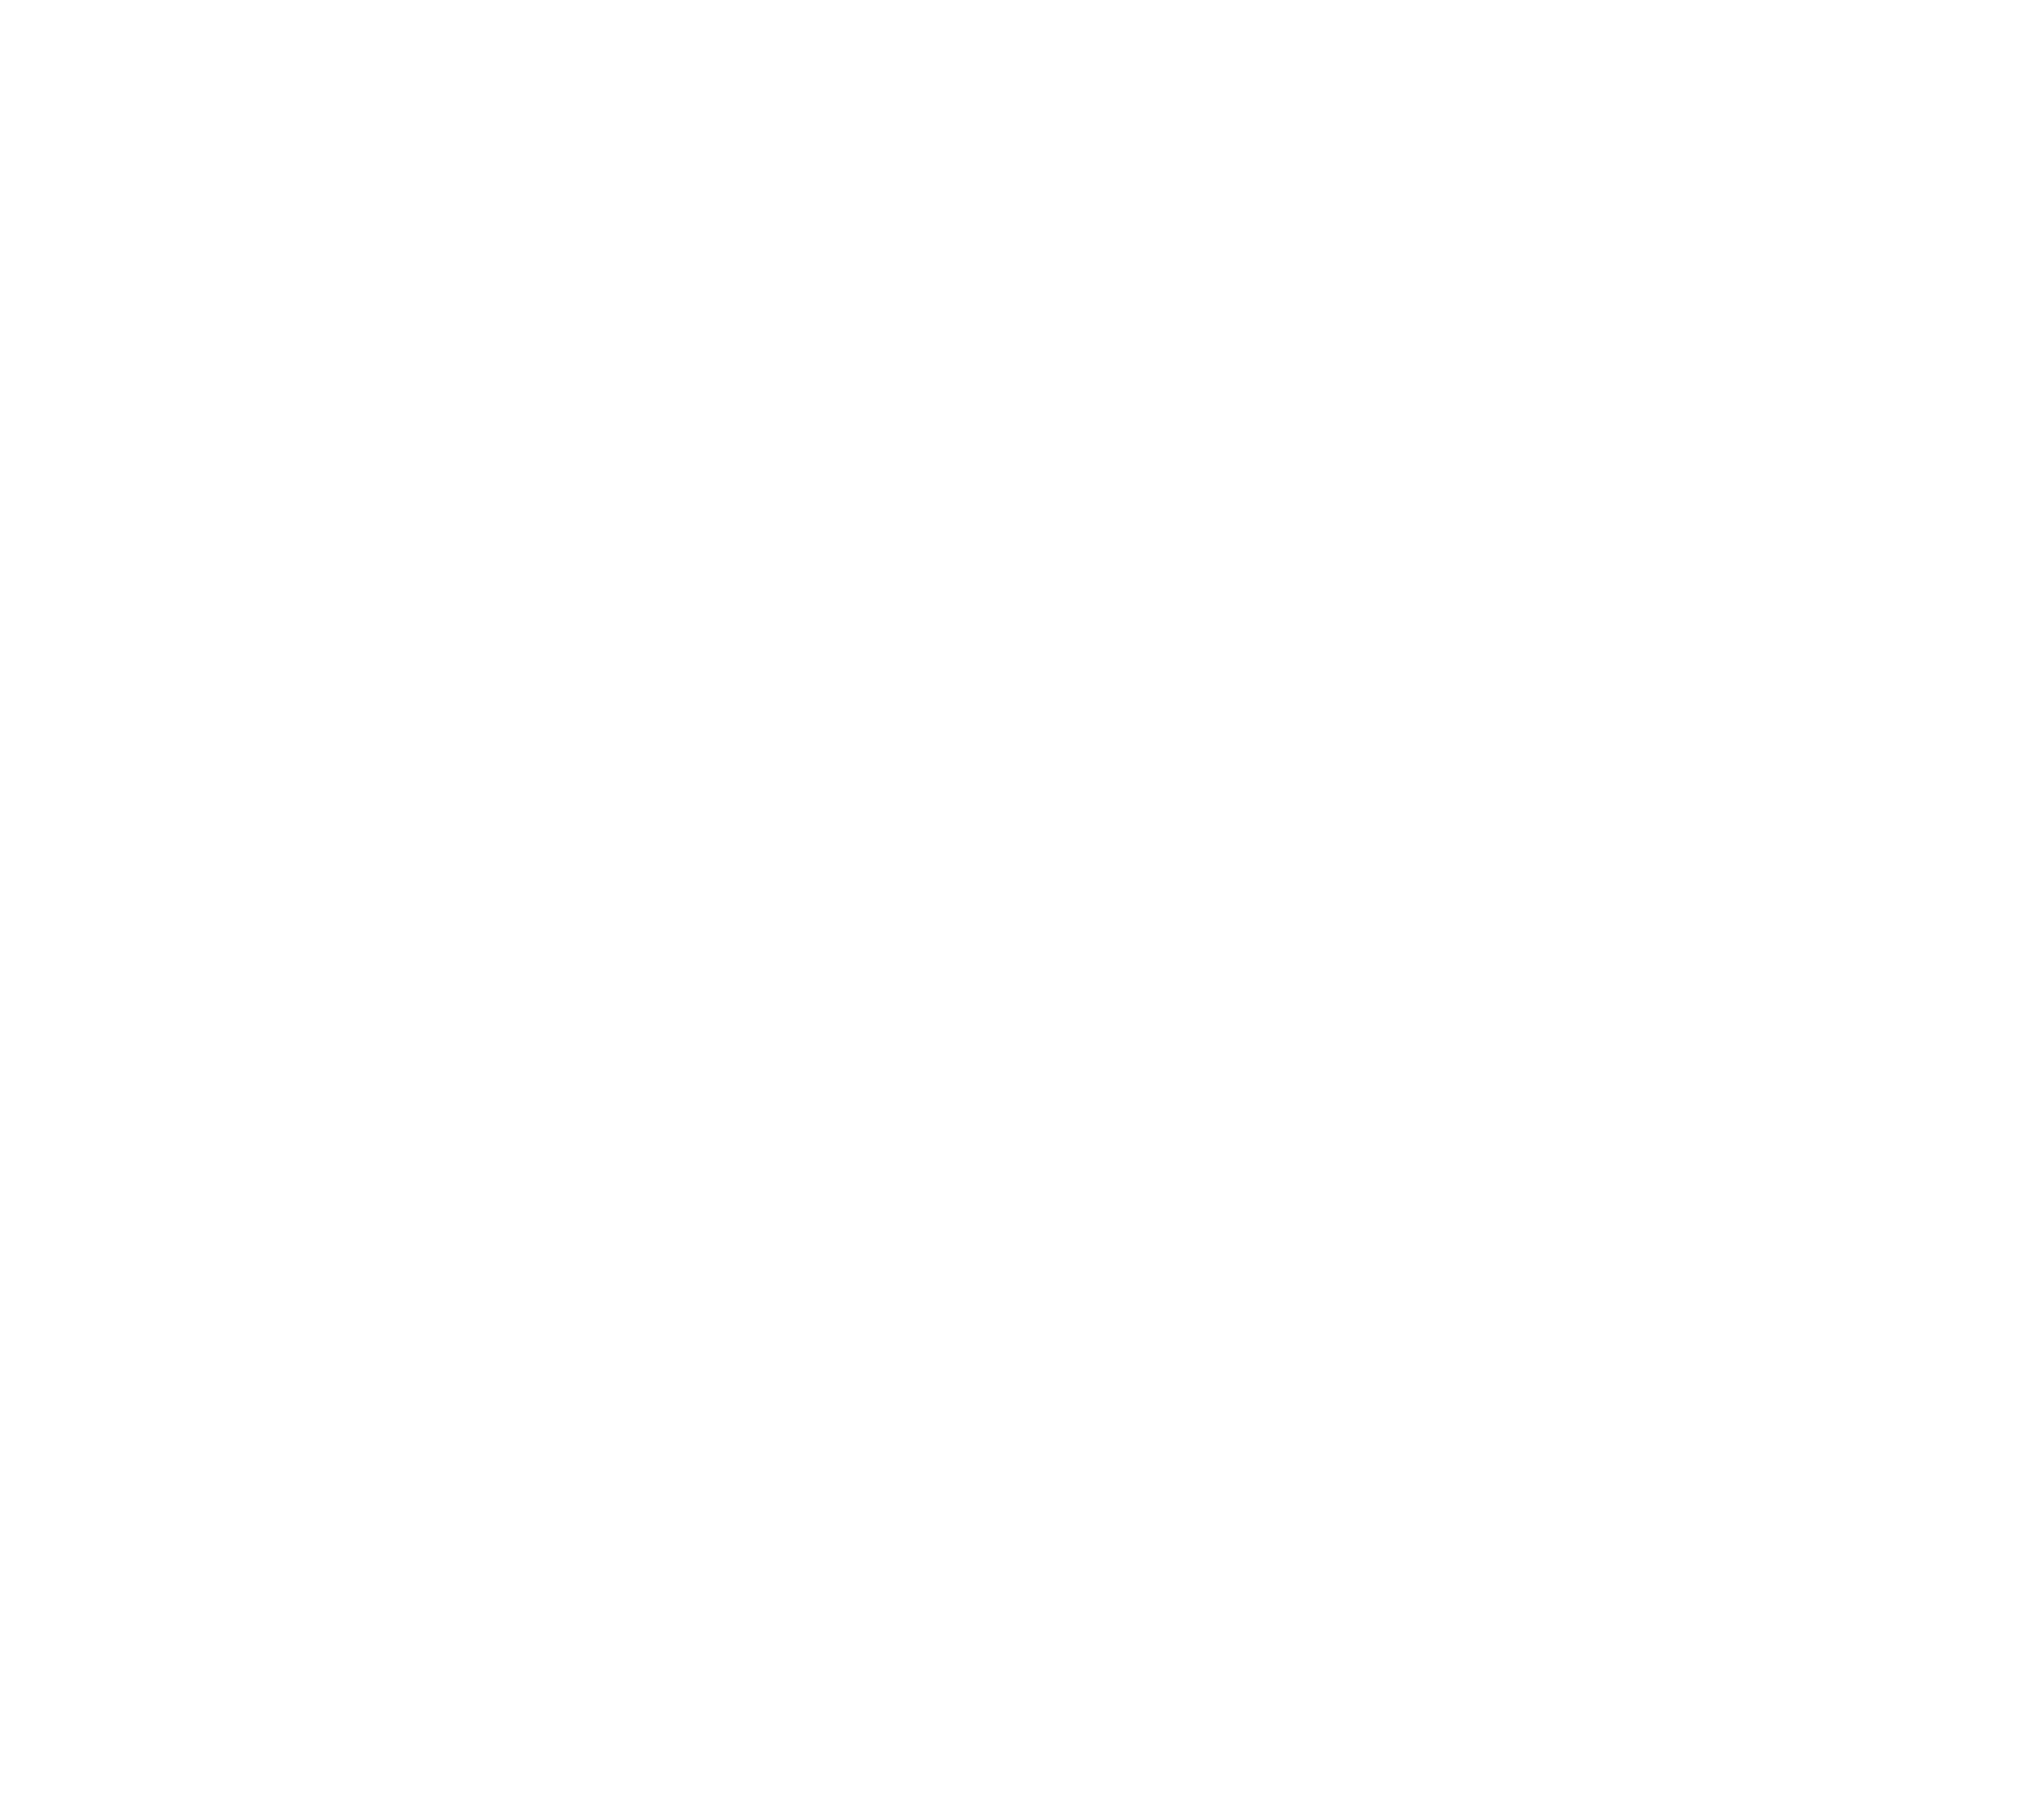 wainba-caption